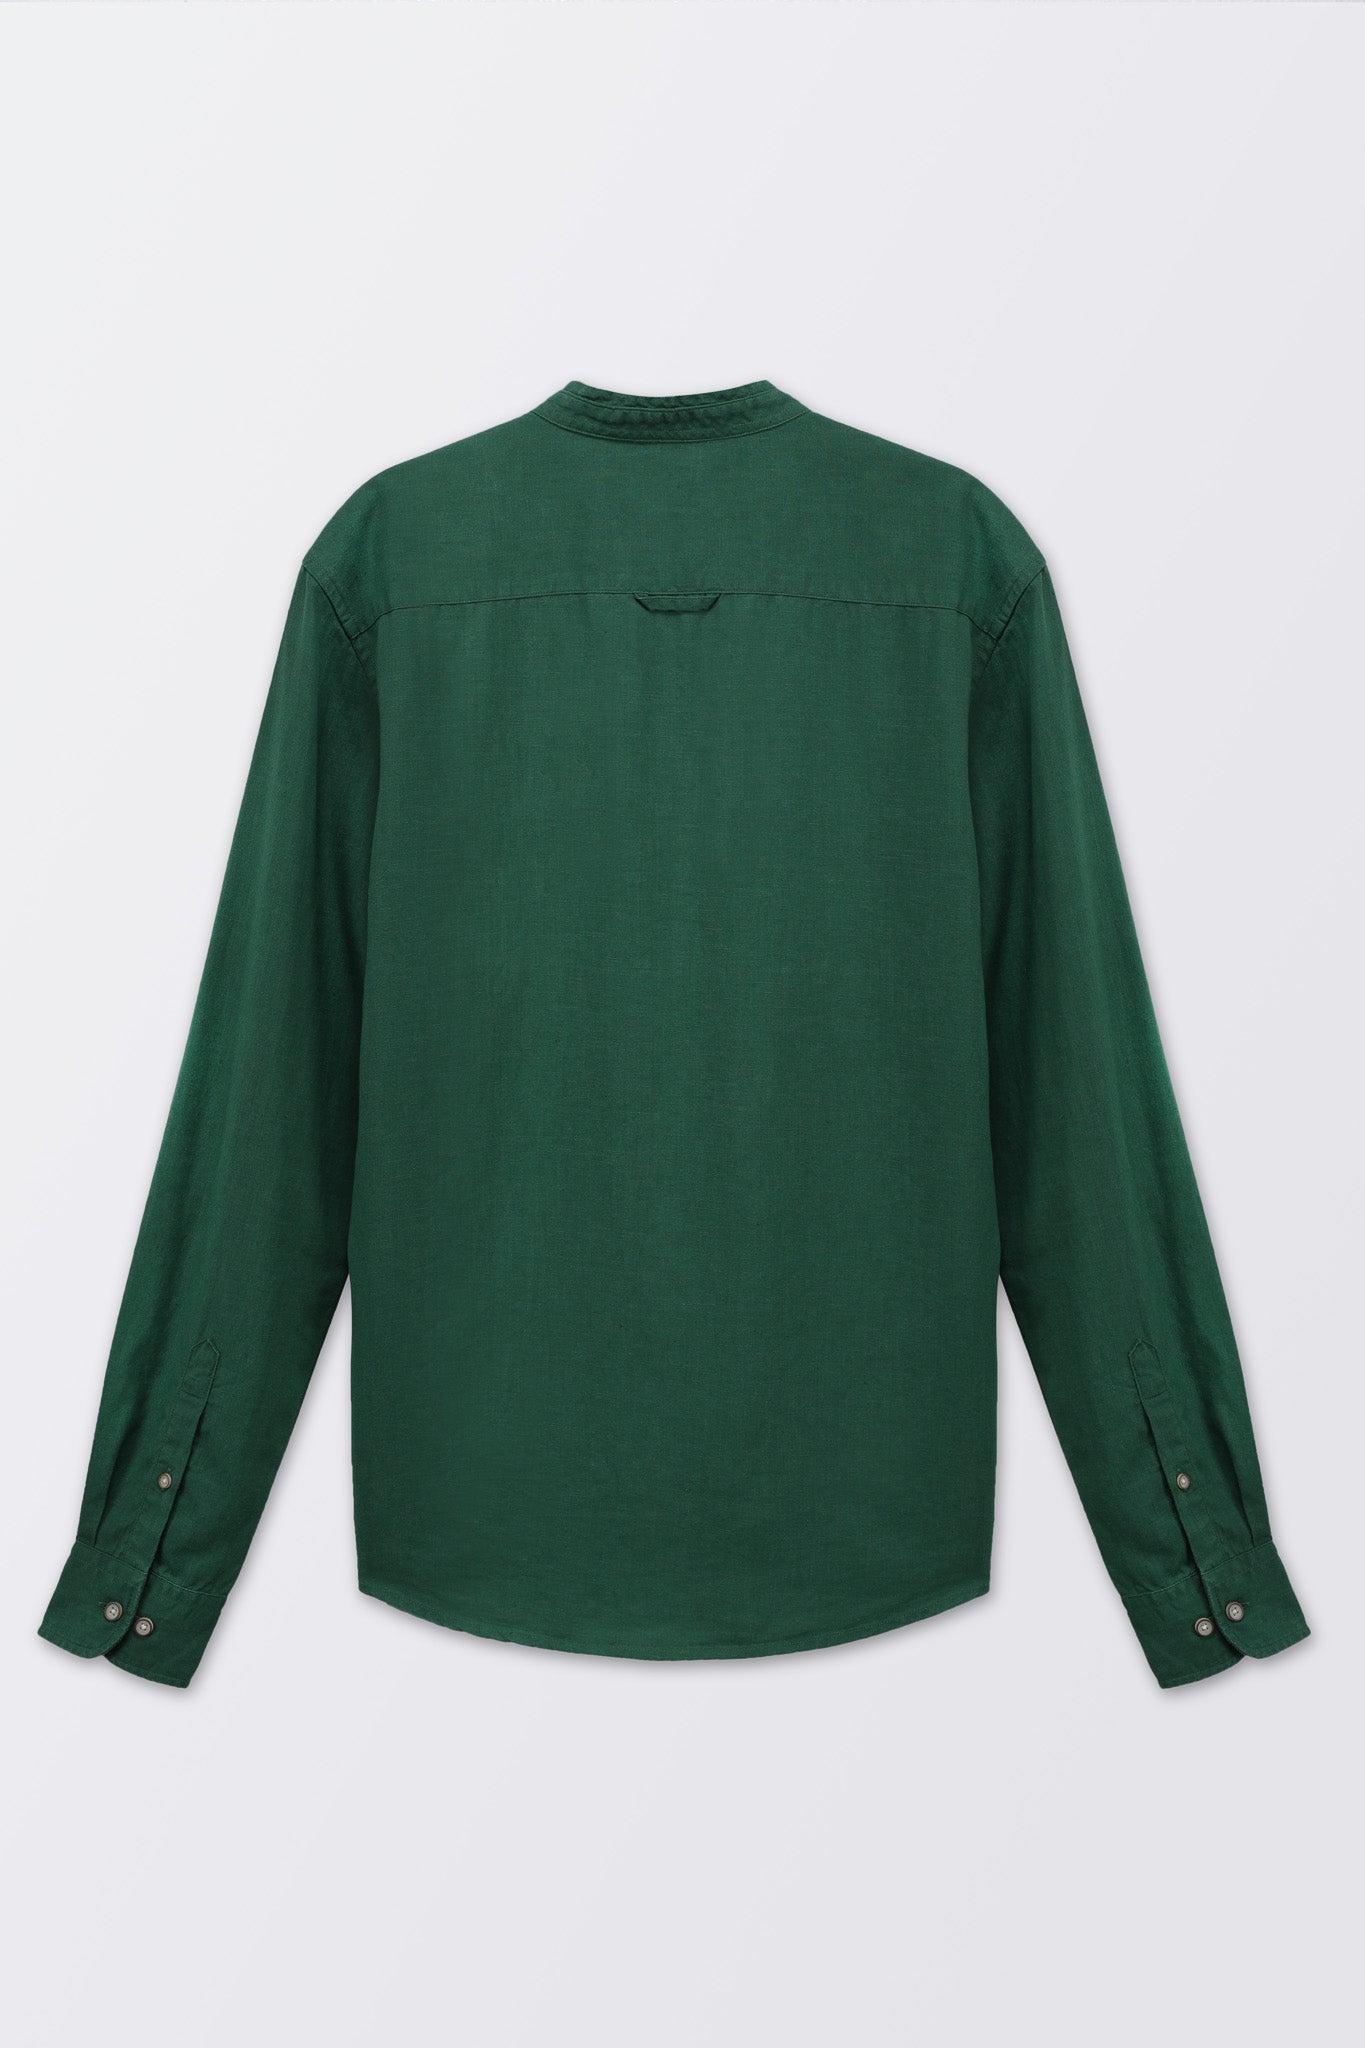 Bare Brown Mandarin Collar Cotton Linen Shirt, Slim Fit with Full Sleeves - Green